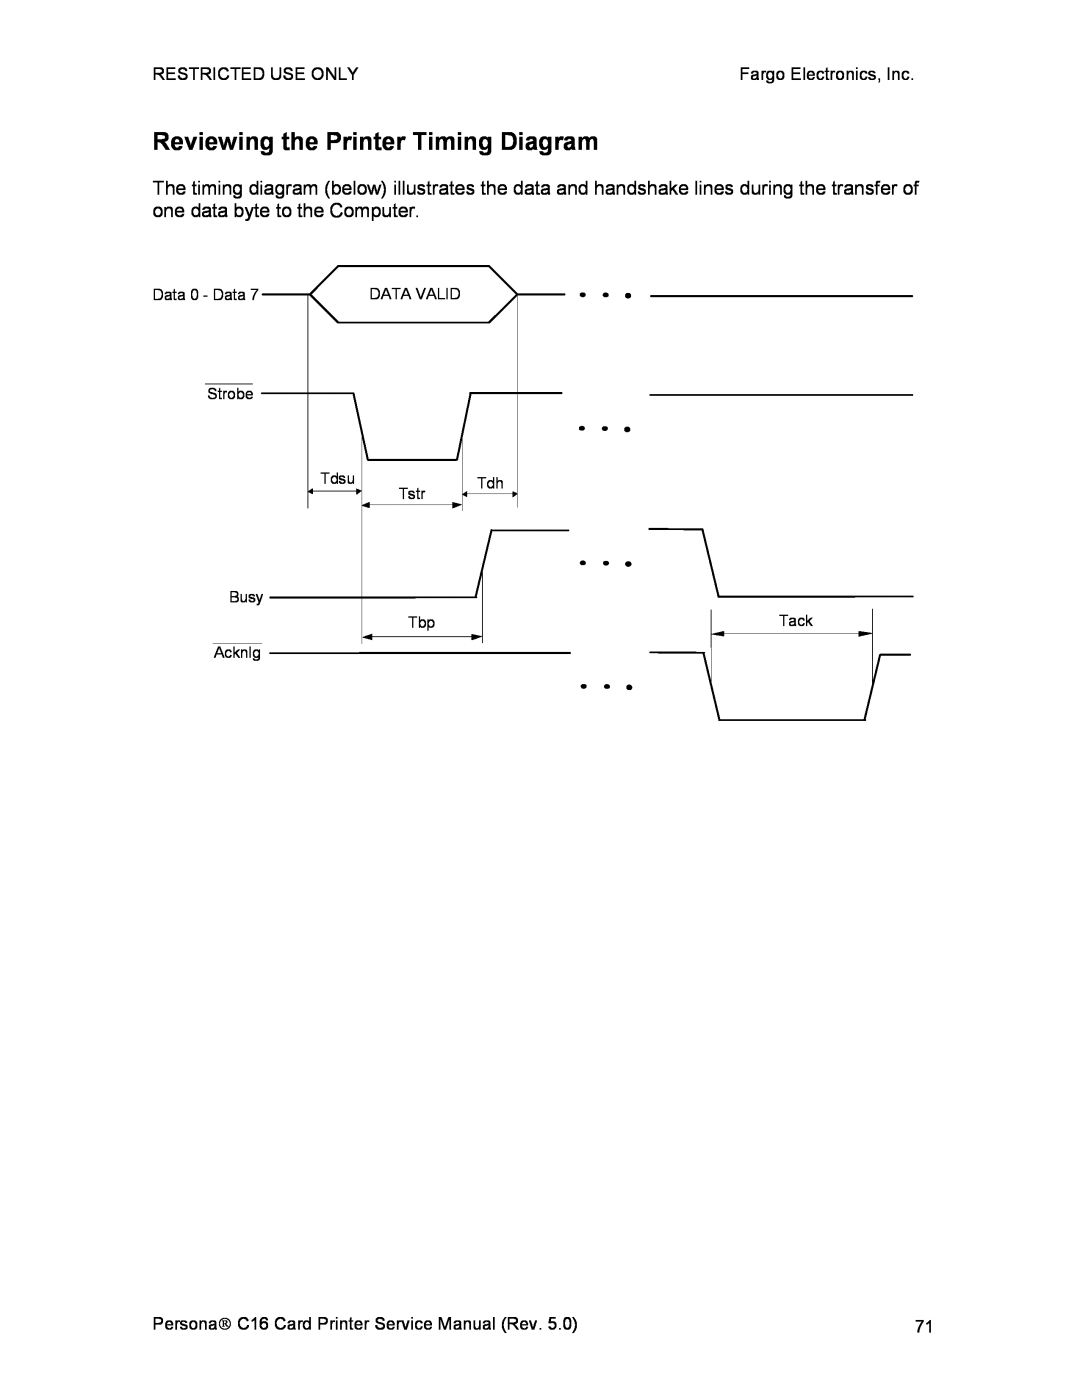 FARGO electronic C16 service manual Reviewing the Printer Timing Diagram 